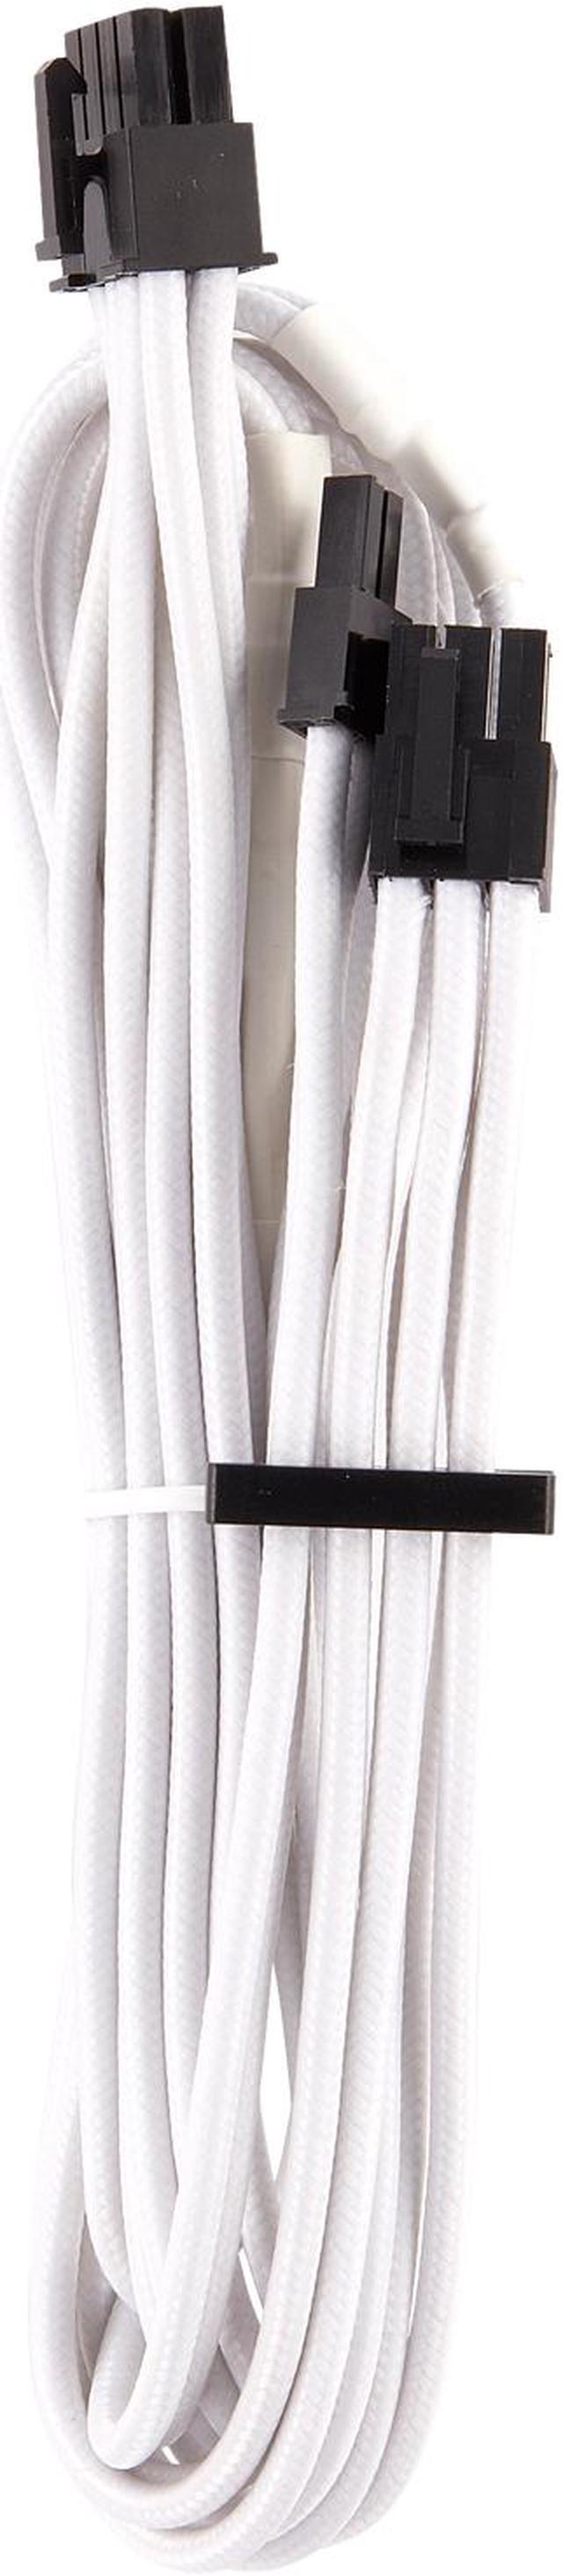 Cables Corsair Sleeved White Starter Kit, Premium PSU Individually